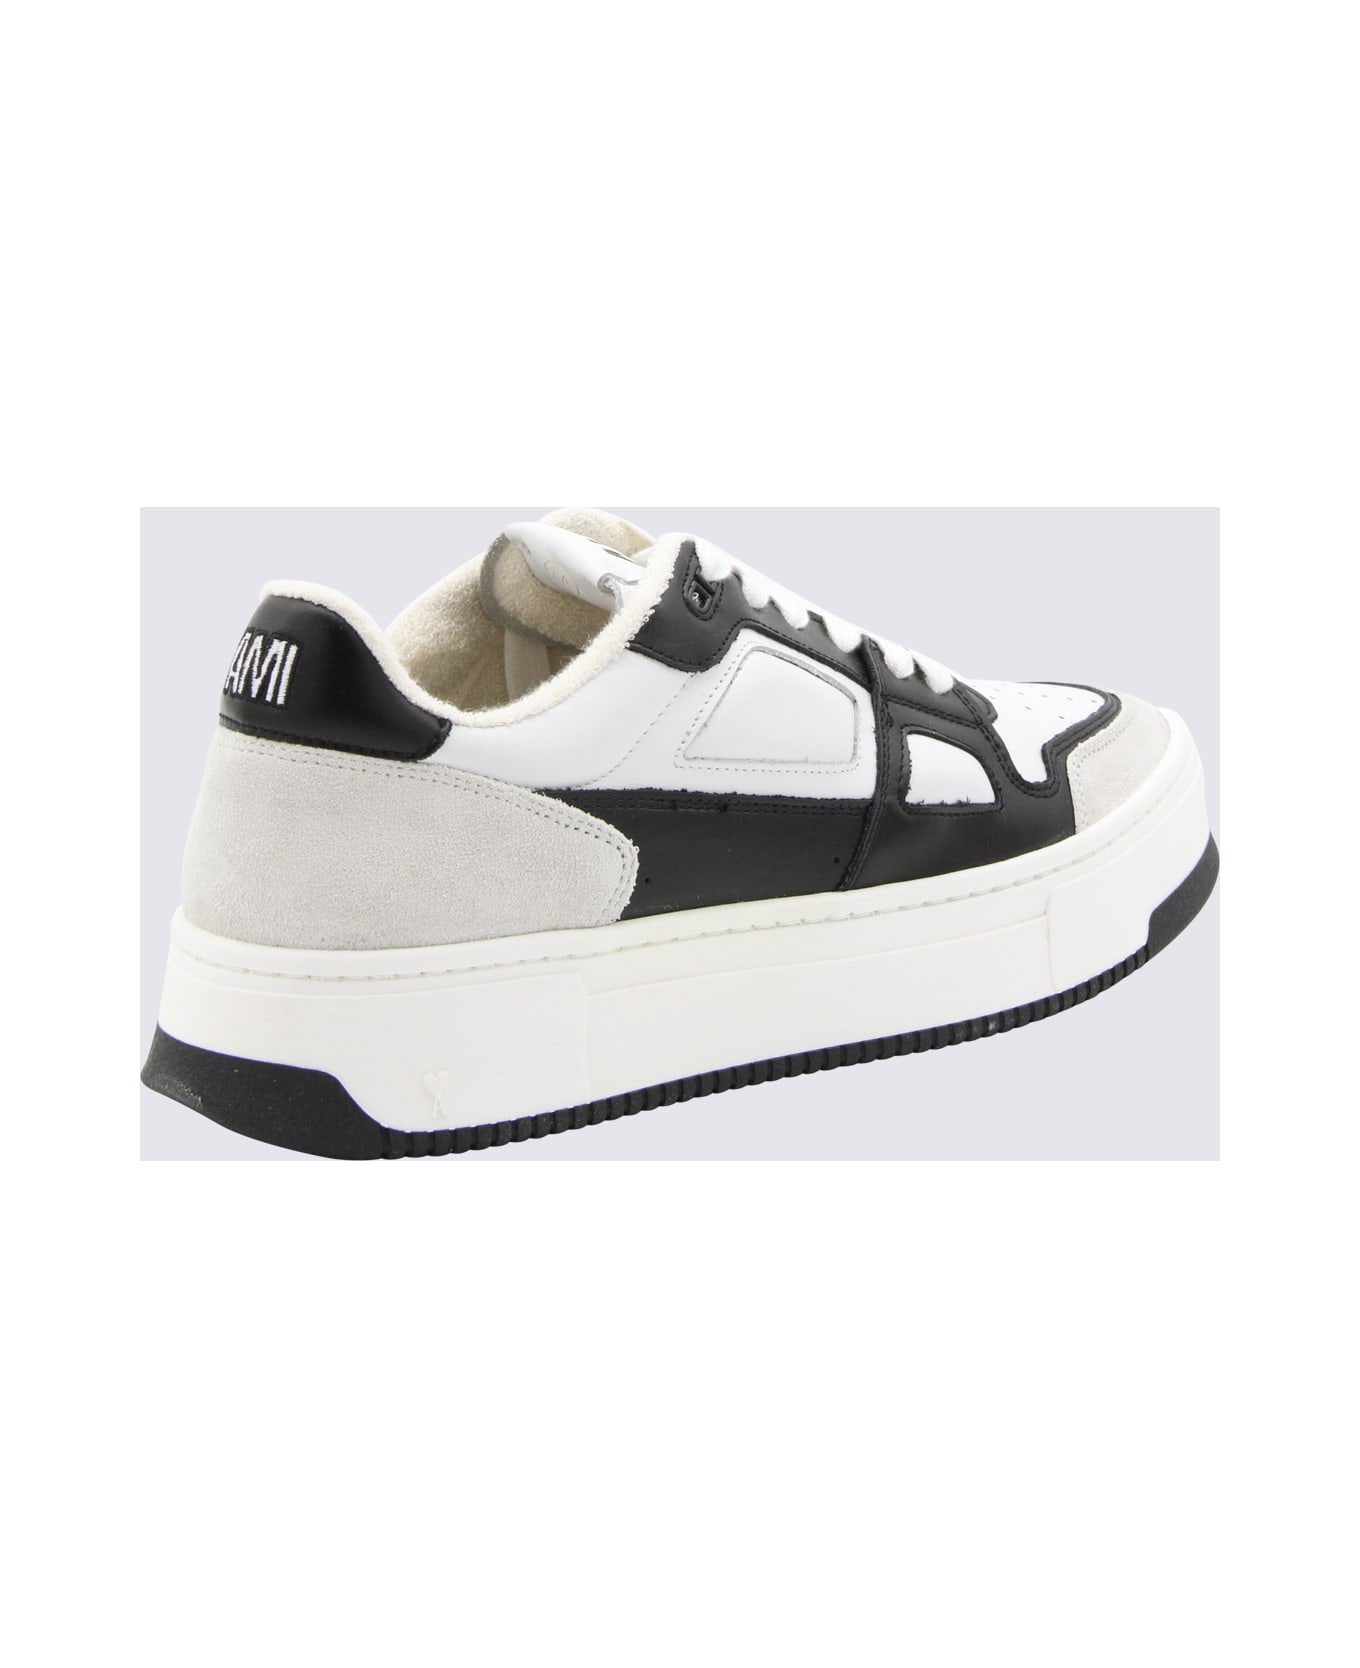 Ami Alexandre Mattiussi Black And White Leather Arcade Sneakers - White